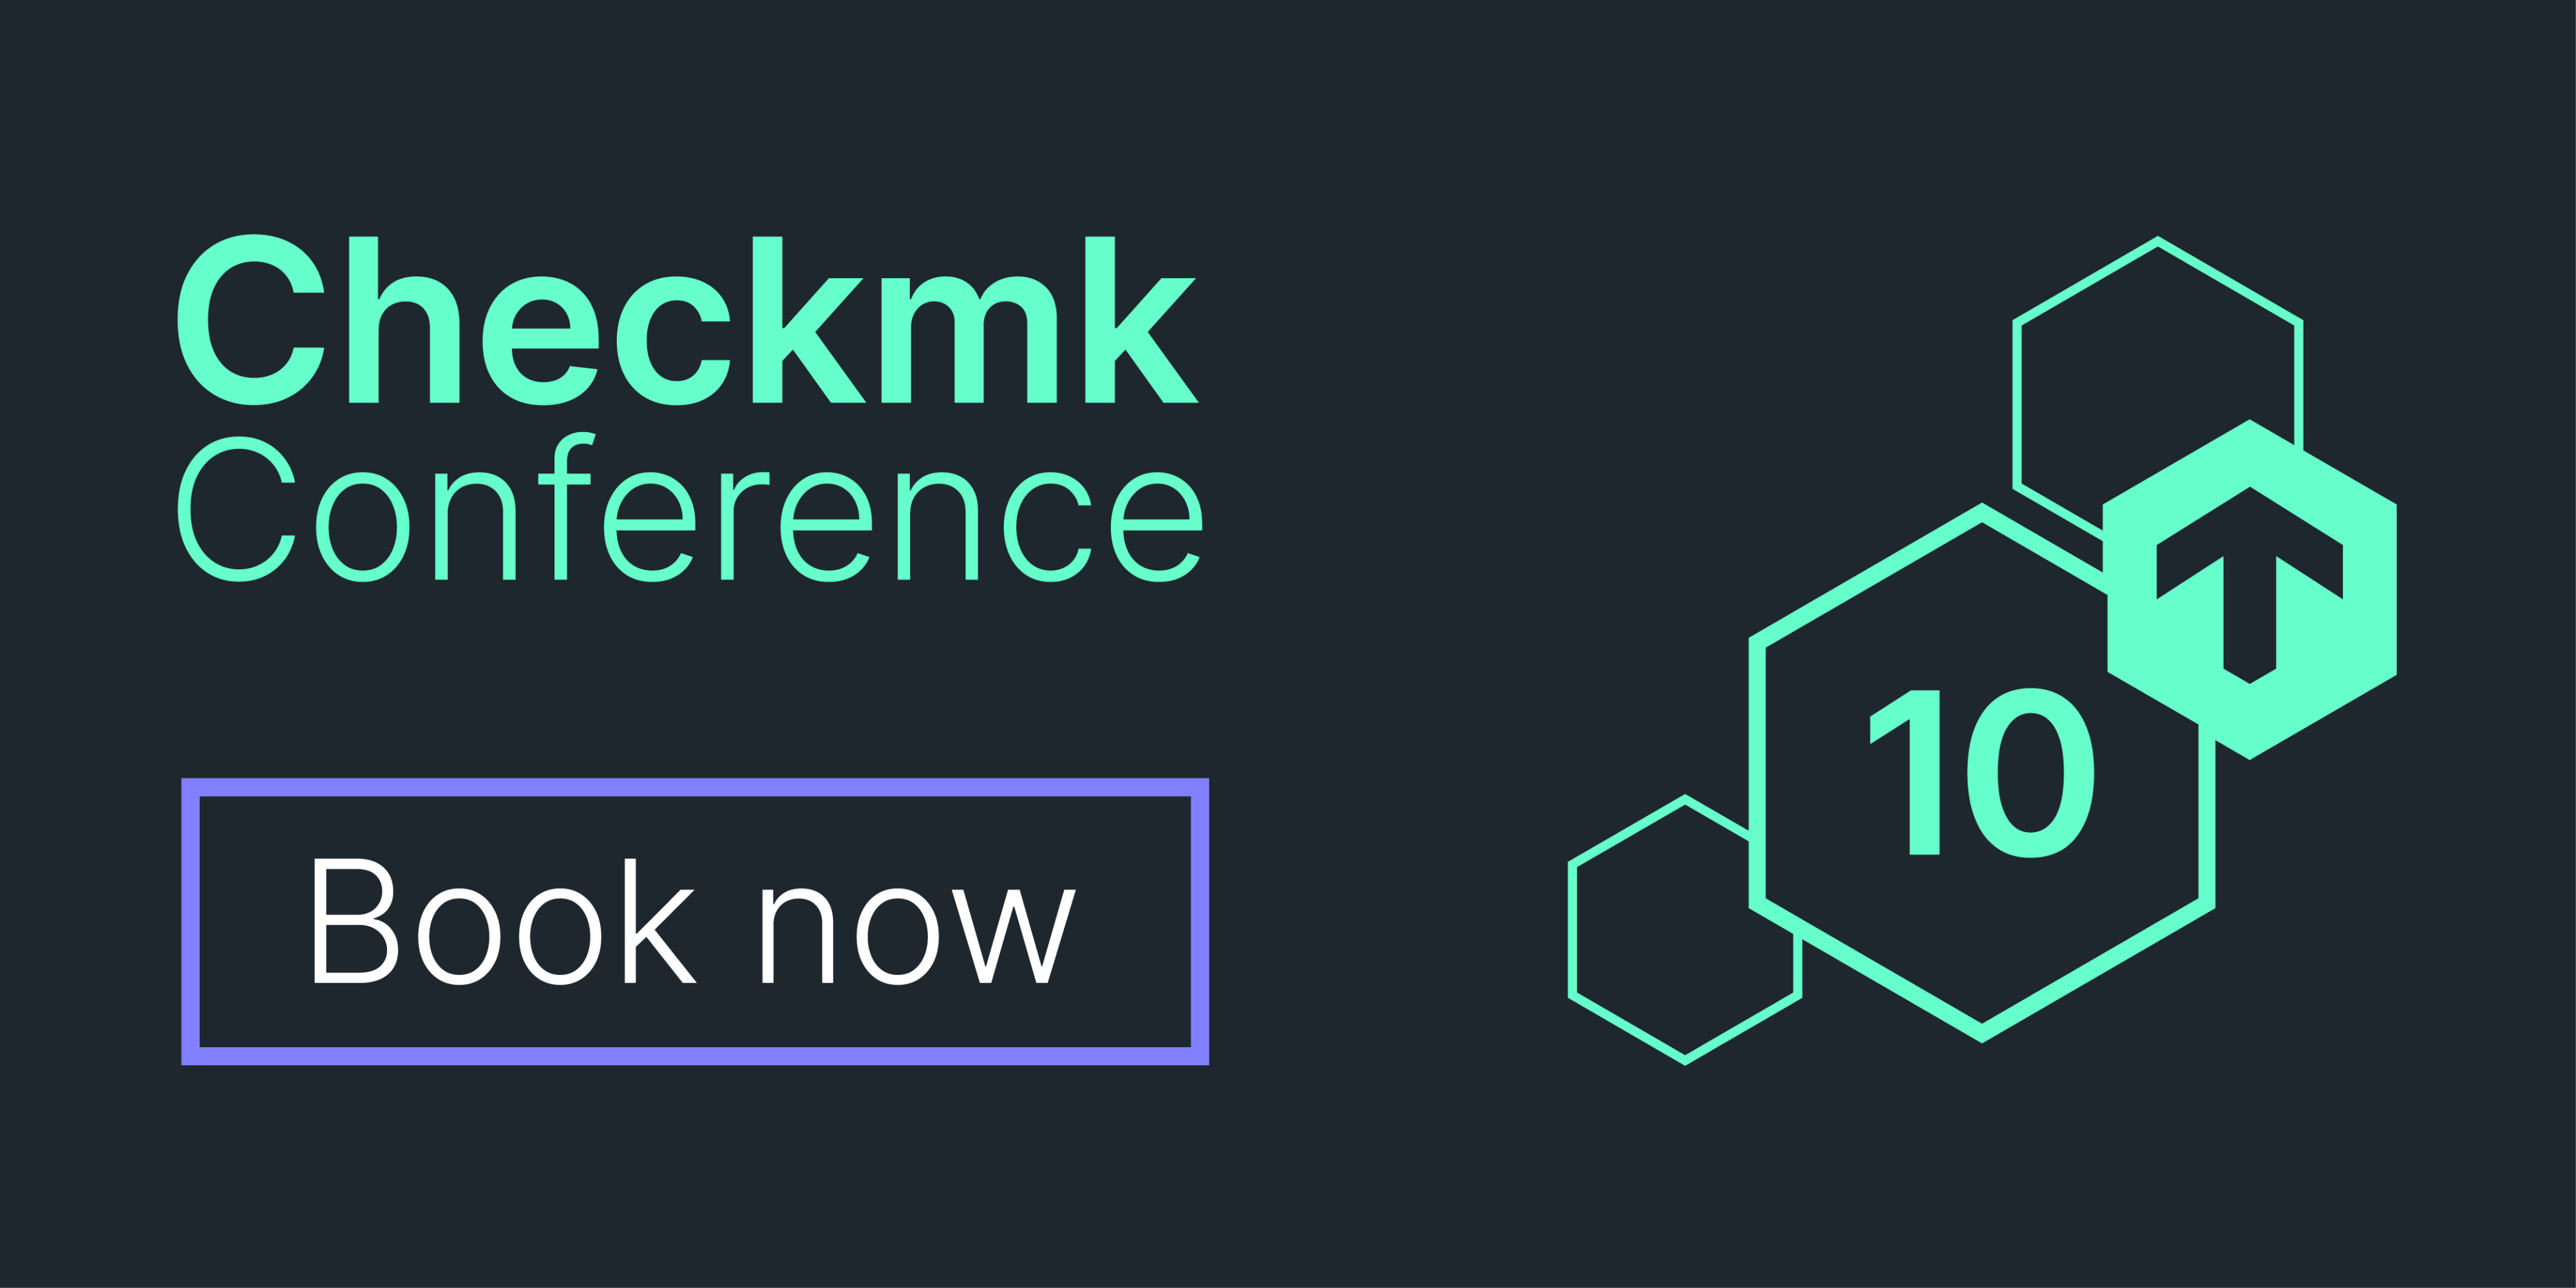 checkmk conference information